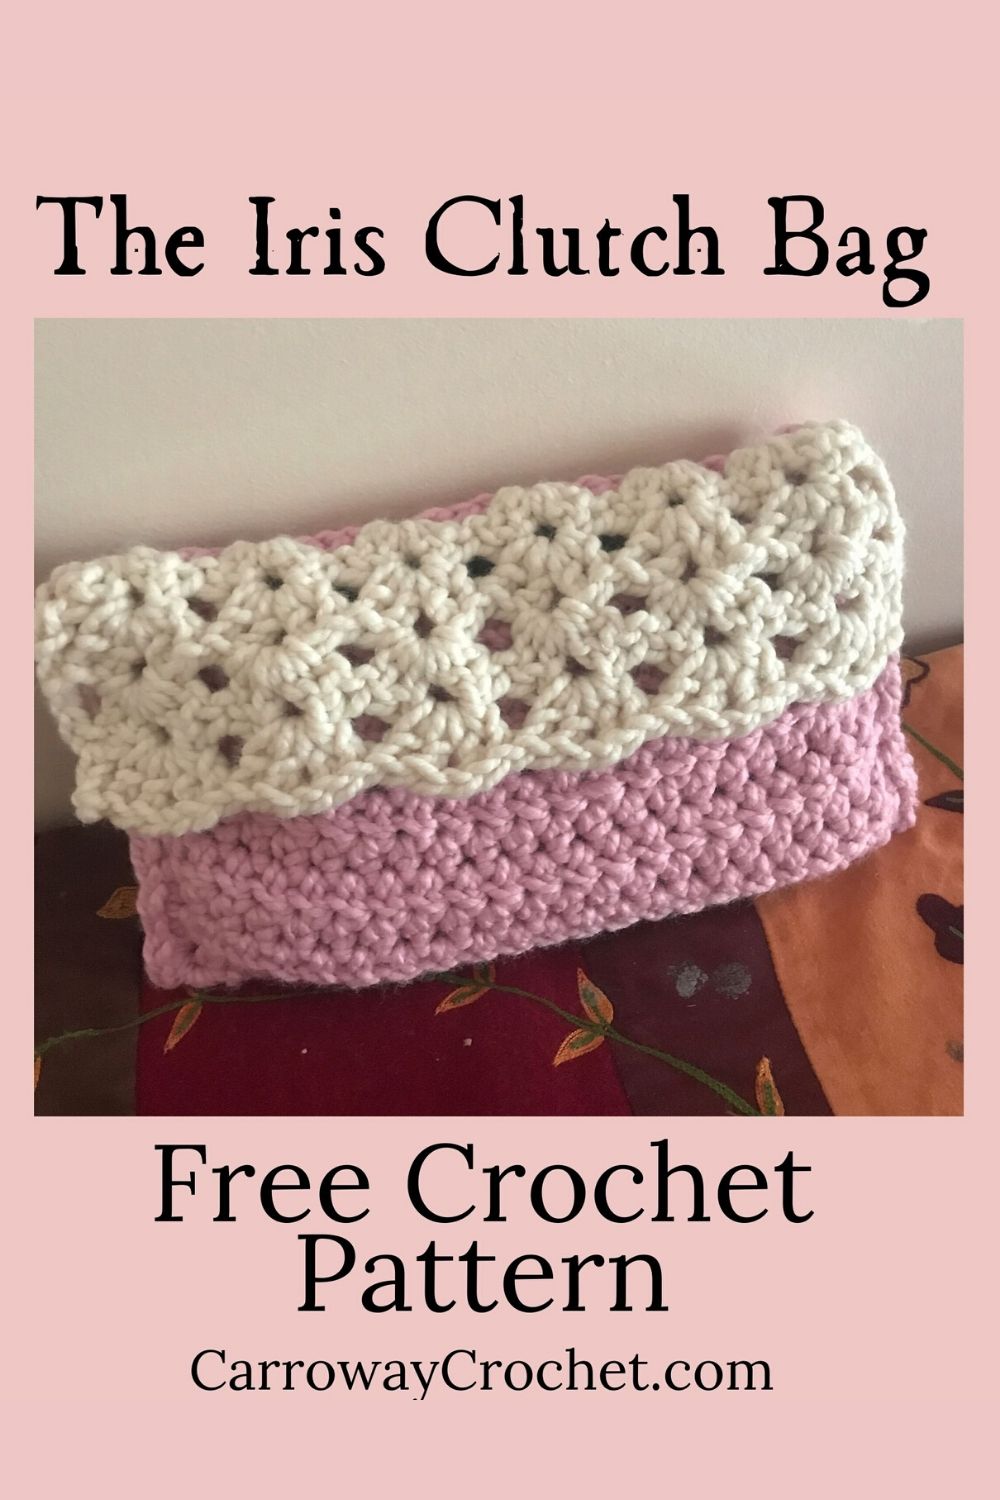 Free Crochet Clutch Bag Pattern - Lotus Flower Bag - Blue Star Crochet